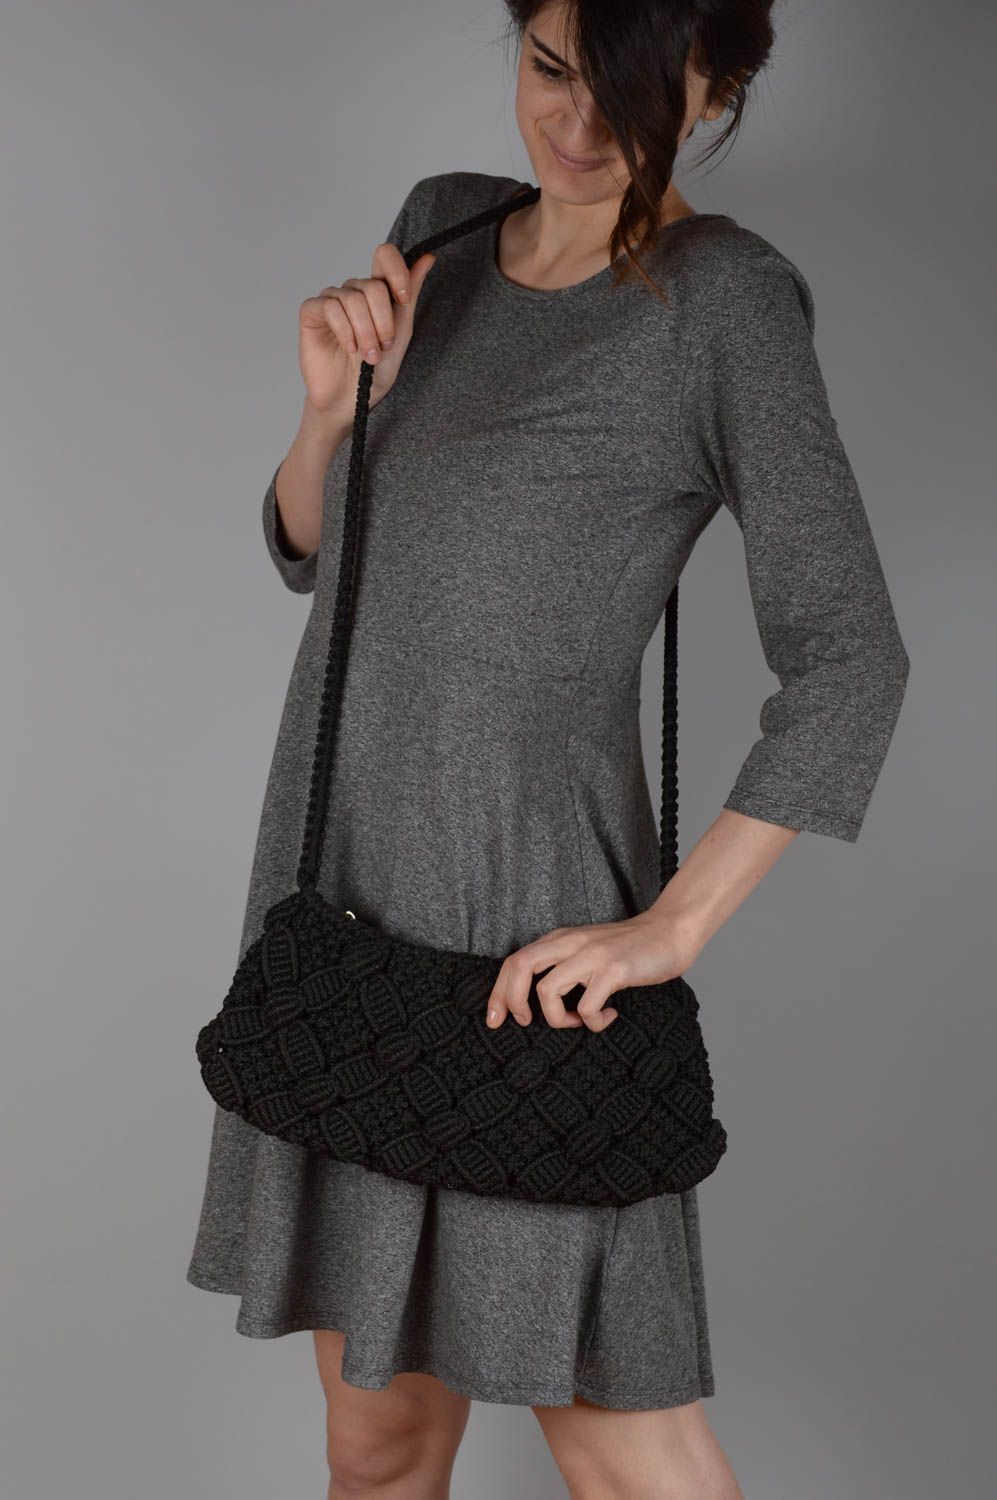 Macrame bag designer handbag handmade bag ladies handbags gifts for girl photo 5